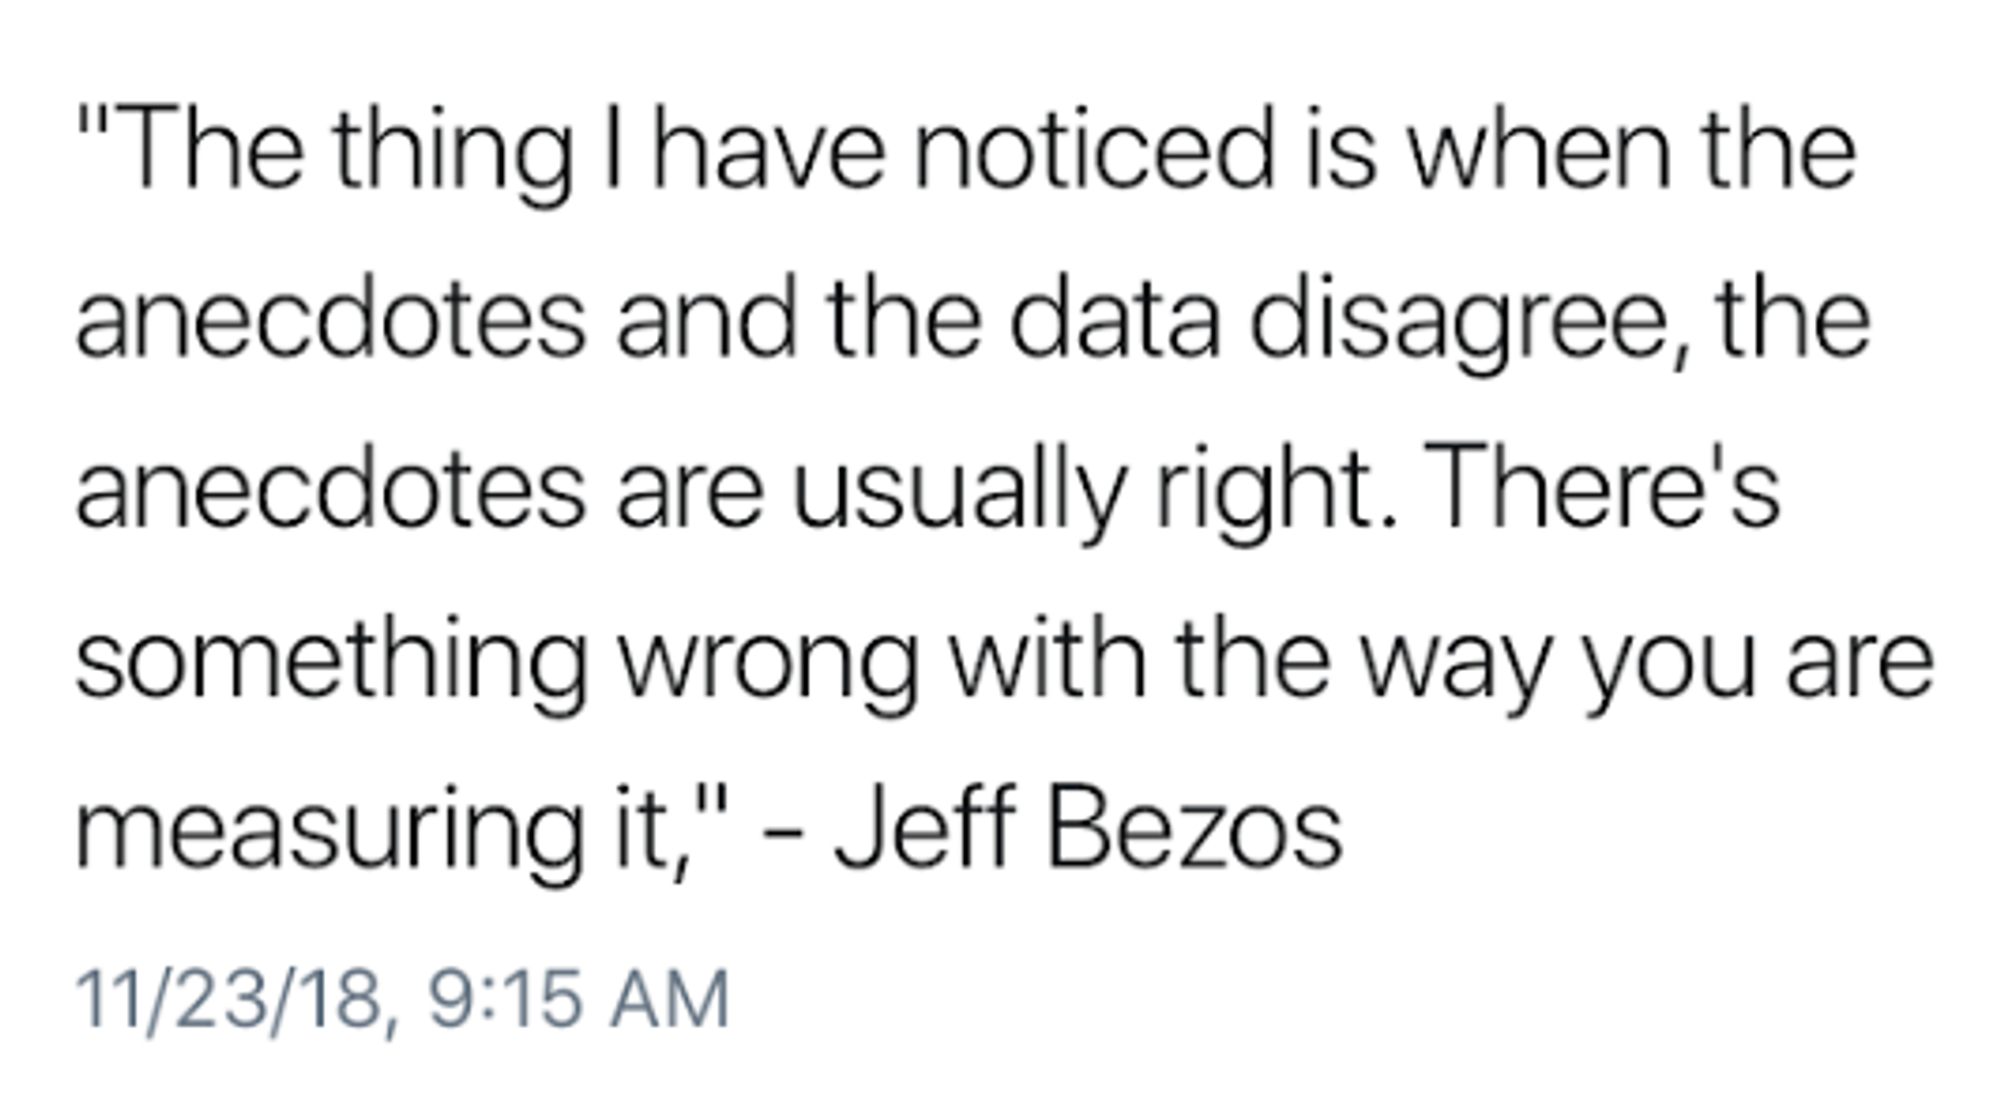 Bezos - Anecdotes vs. Data